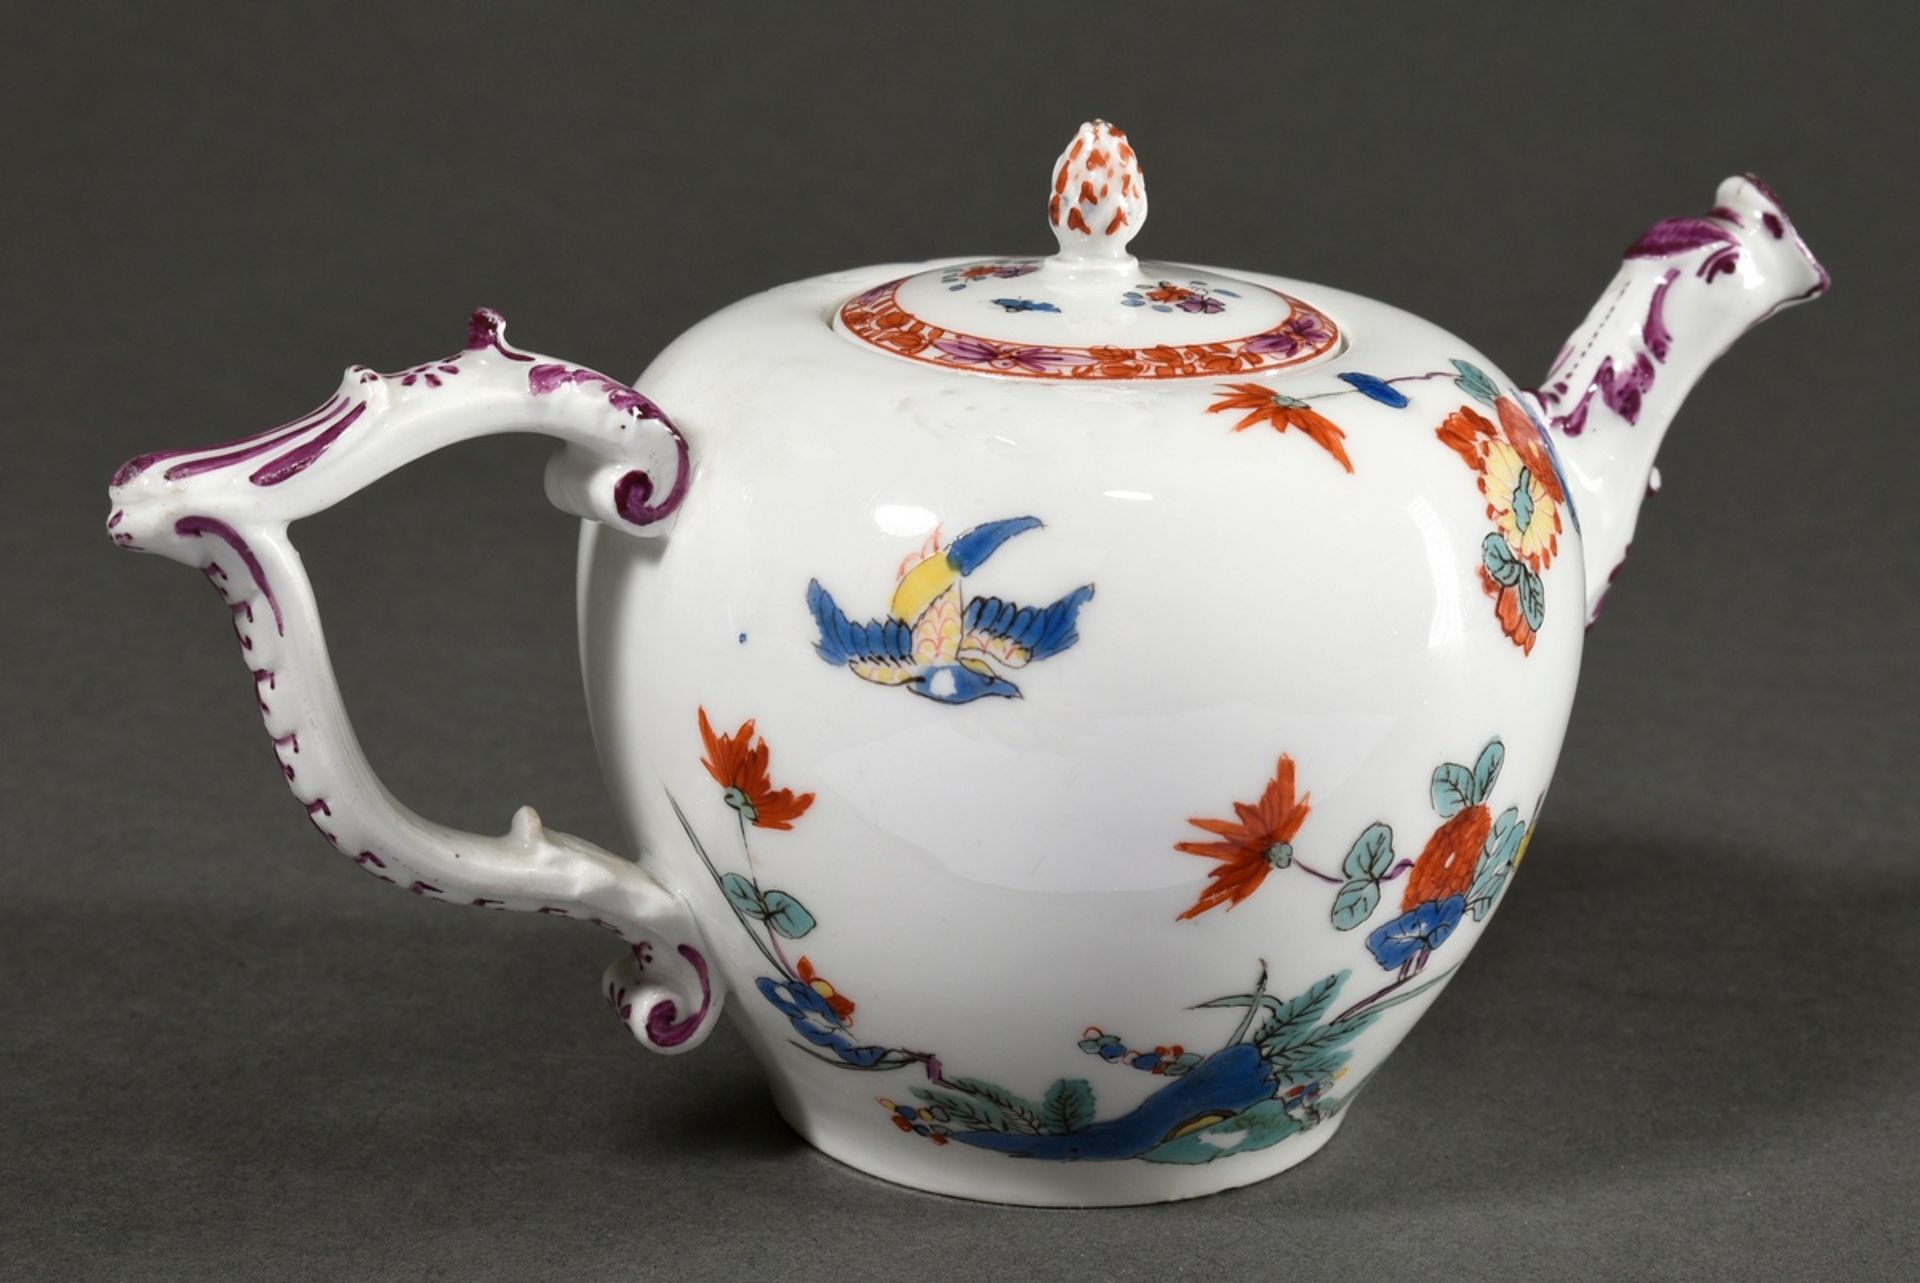 Small Meissen teapot with Kakiemon decor "Vogel und Blütenzweige" in iron red, overglaze blue, sea  - Image 2 of 6